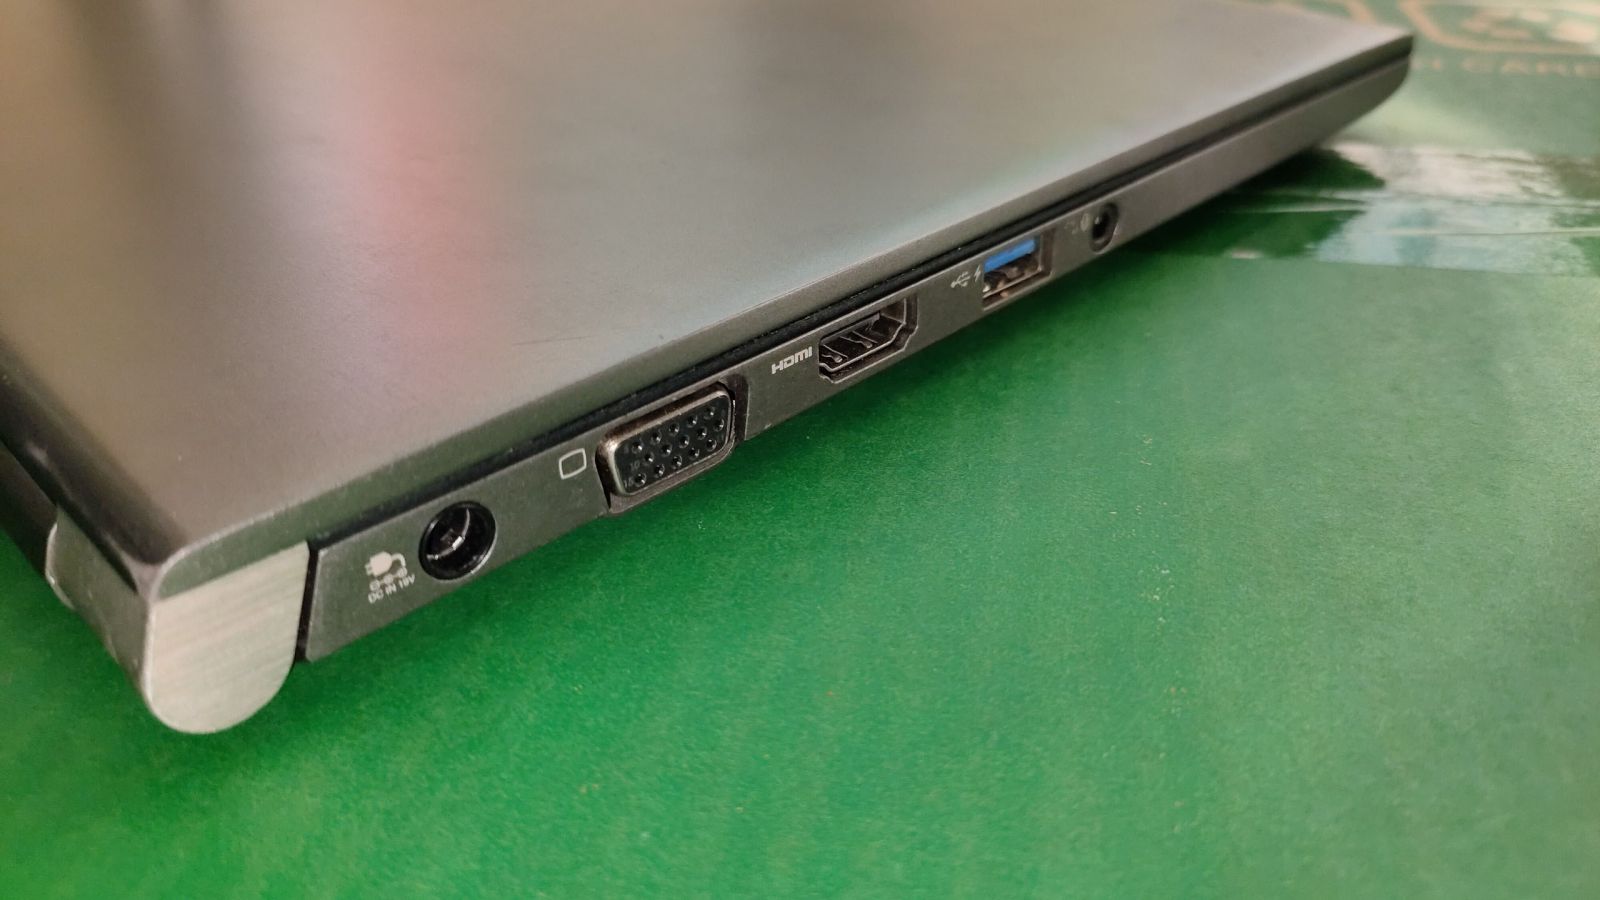 Laptop xách tay Toshiba Dynabook R63/D i5 6200U (Nhật, 2nd)